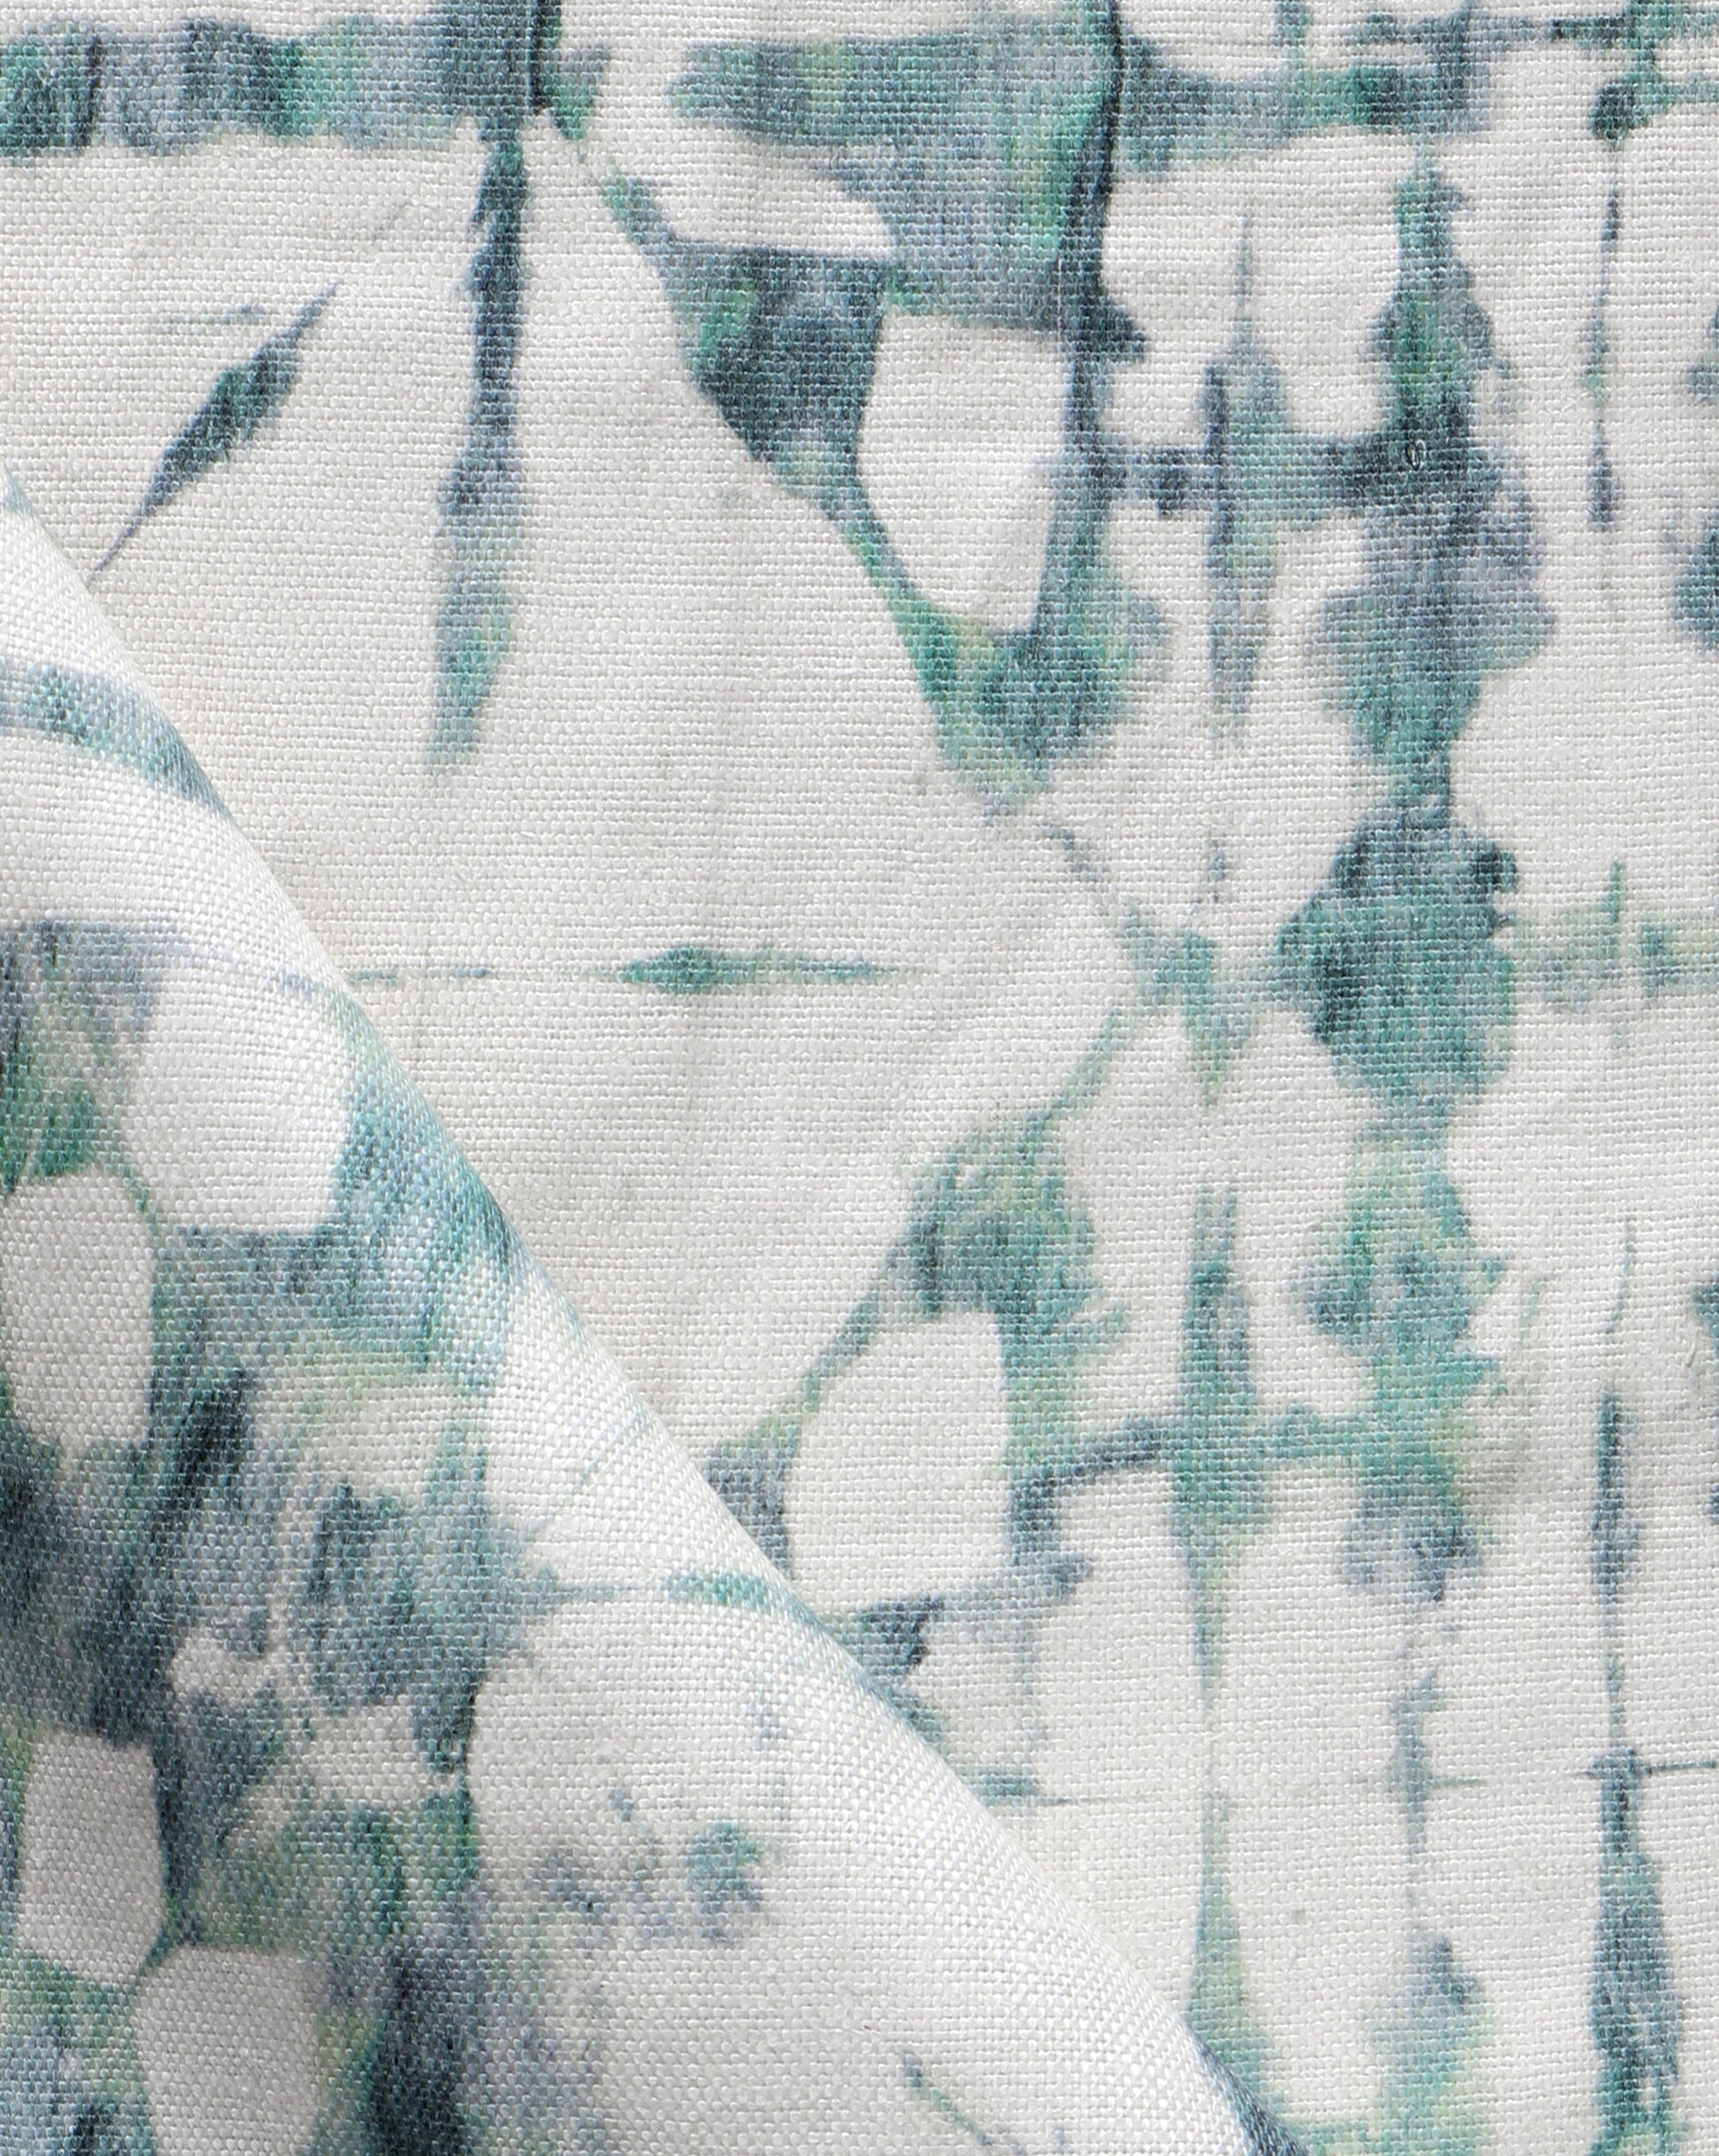 A close up of a Banda Fabric||Chloros using shibori tie-dye techniques.